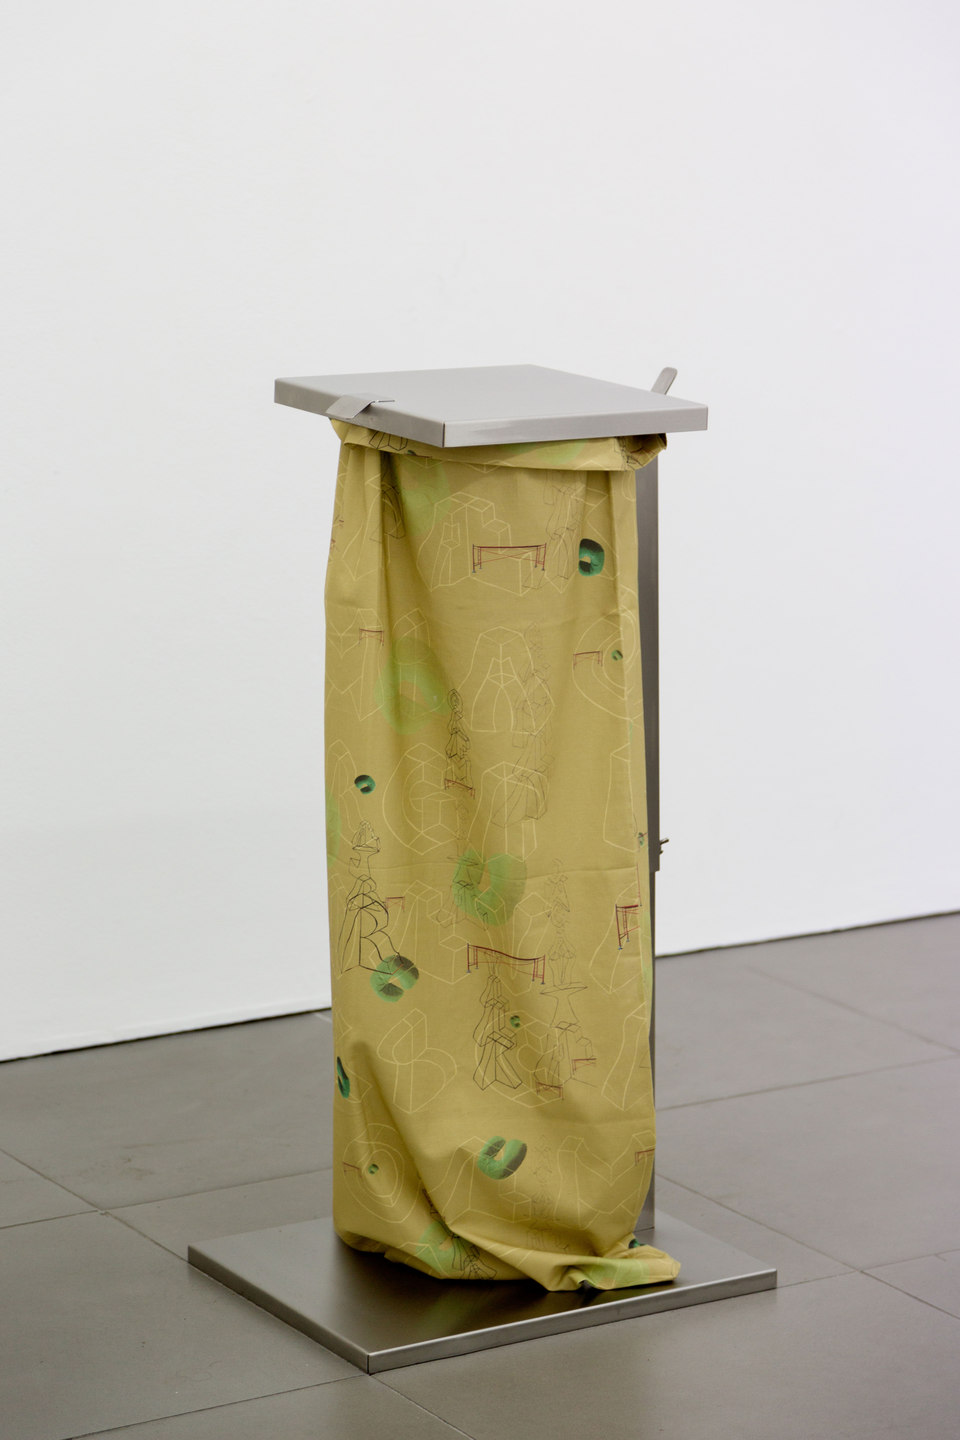 Marte Eknæs, Reboot Horizon, 'Disposal' (featuring Nicolau Verguerio), 2013, steel trash bag stand, custom printed fabric, Cell Project Space